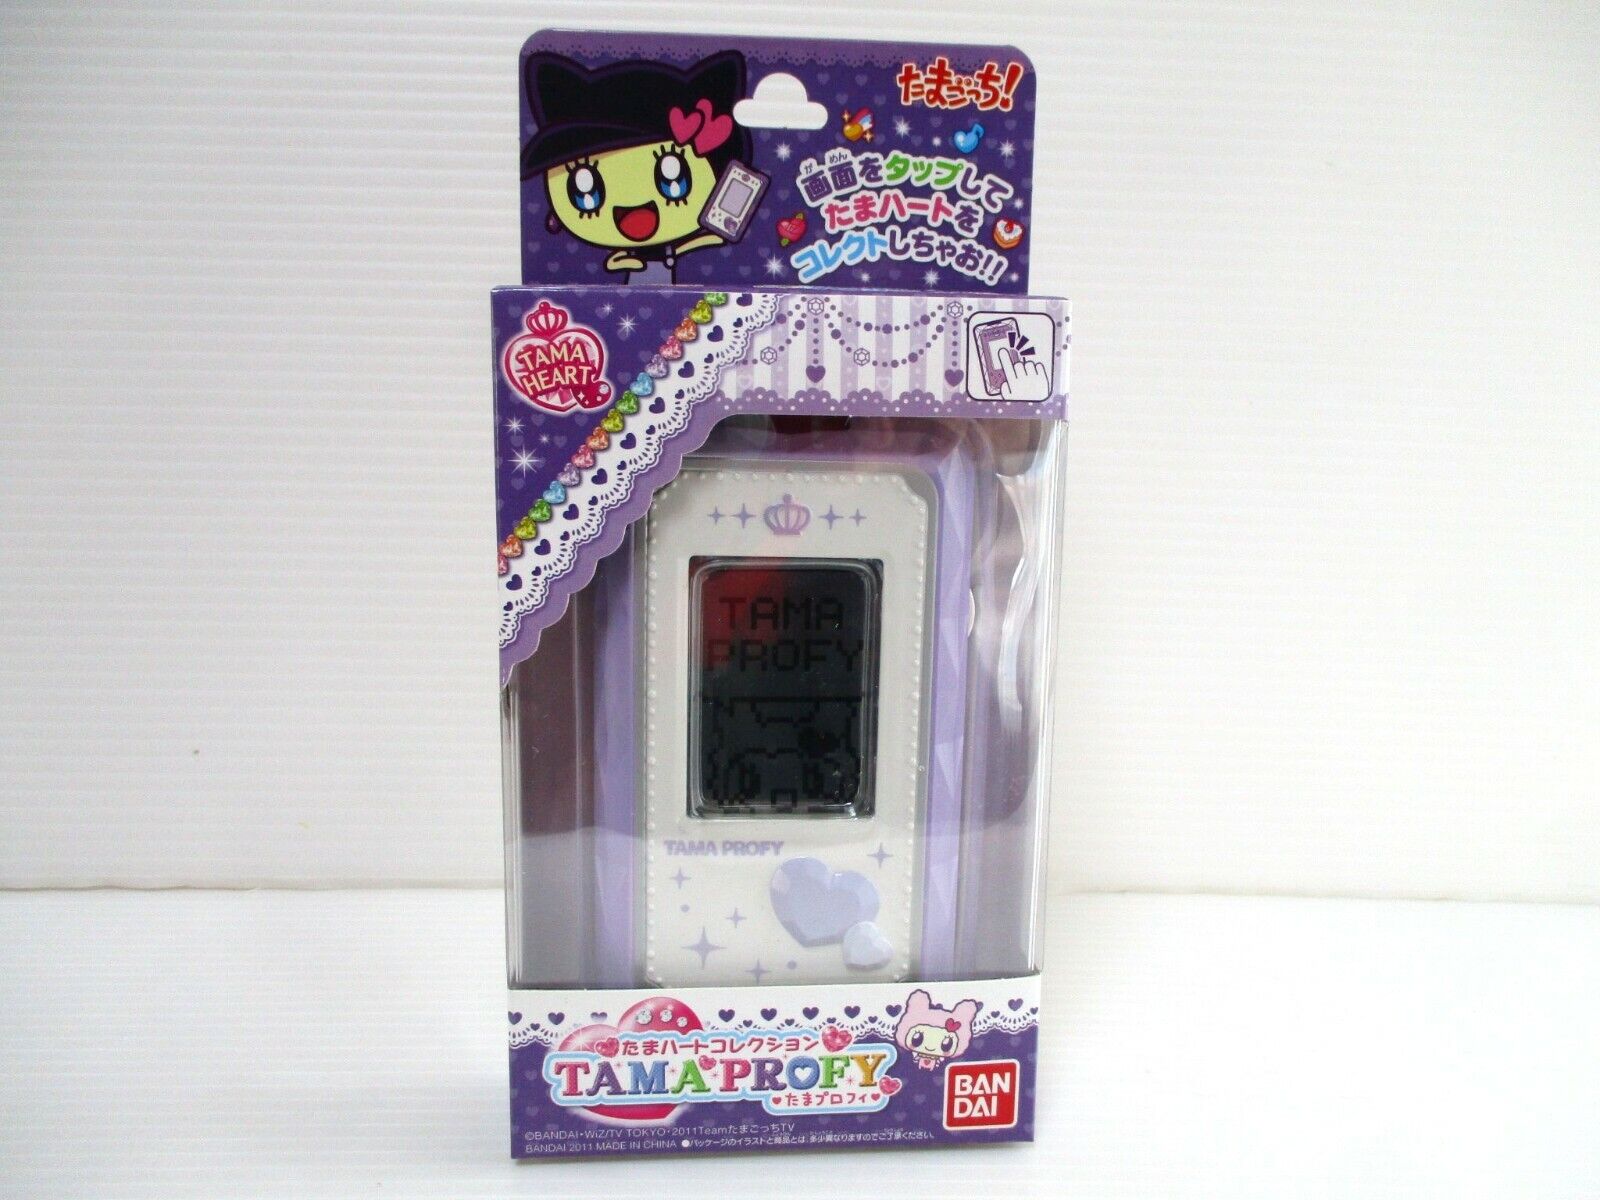 Tamagotchi Game Tama Profy Tamaprofy Purple 2011 combine save BANDAI Japan New